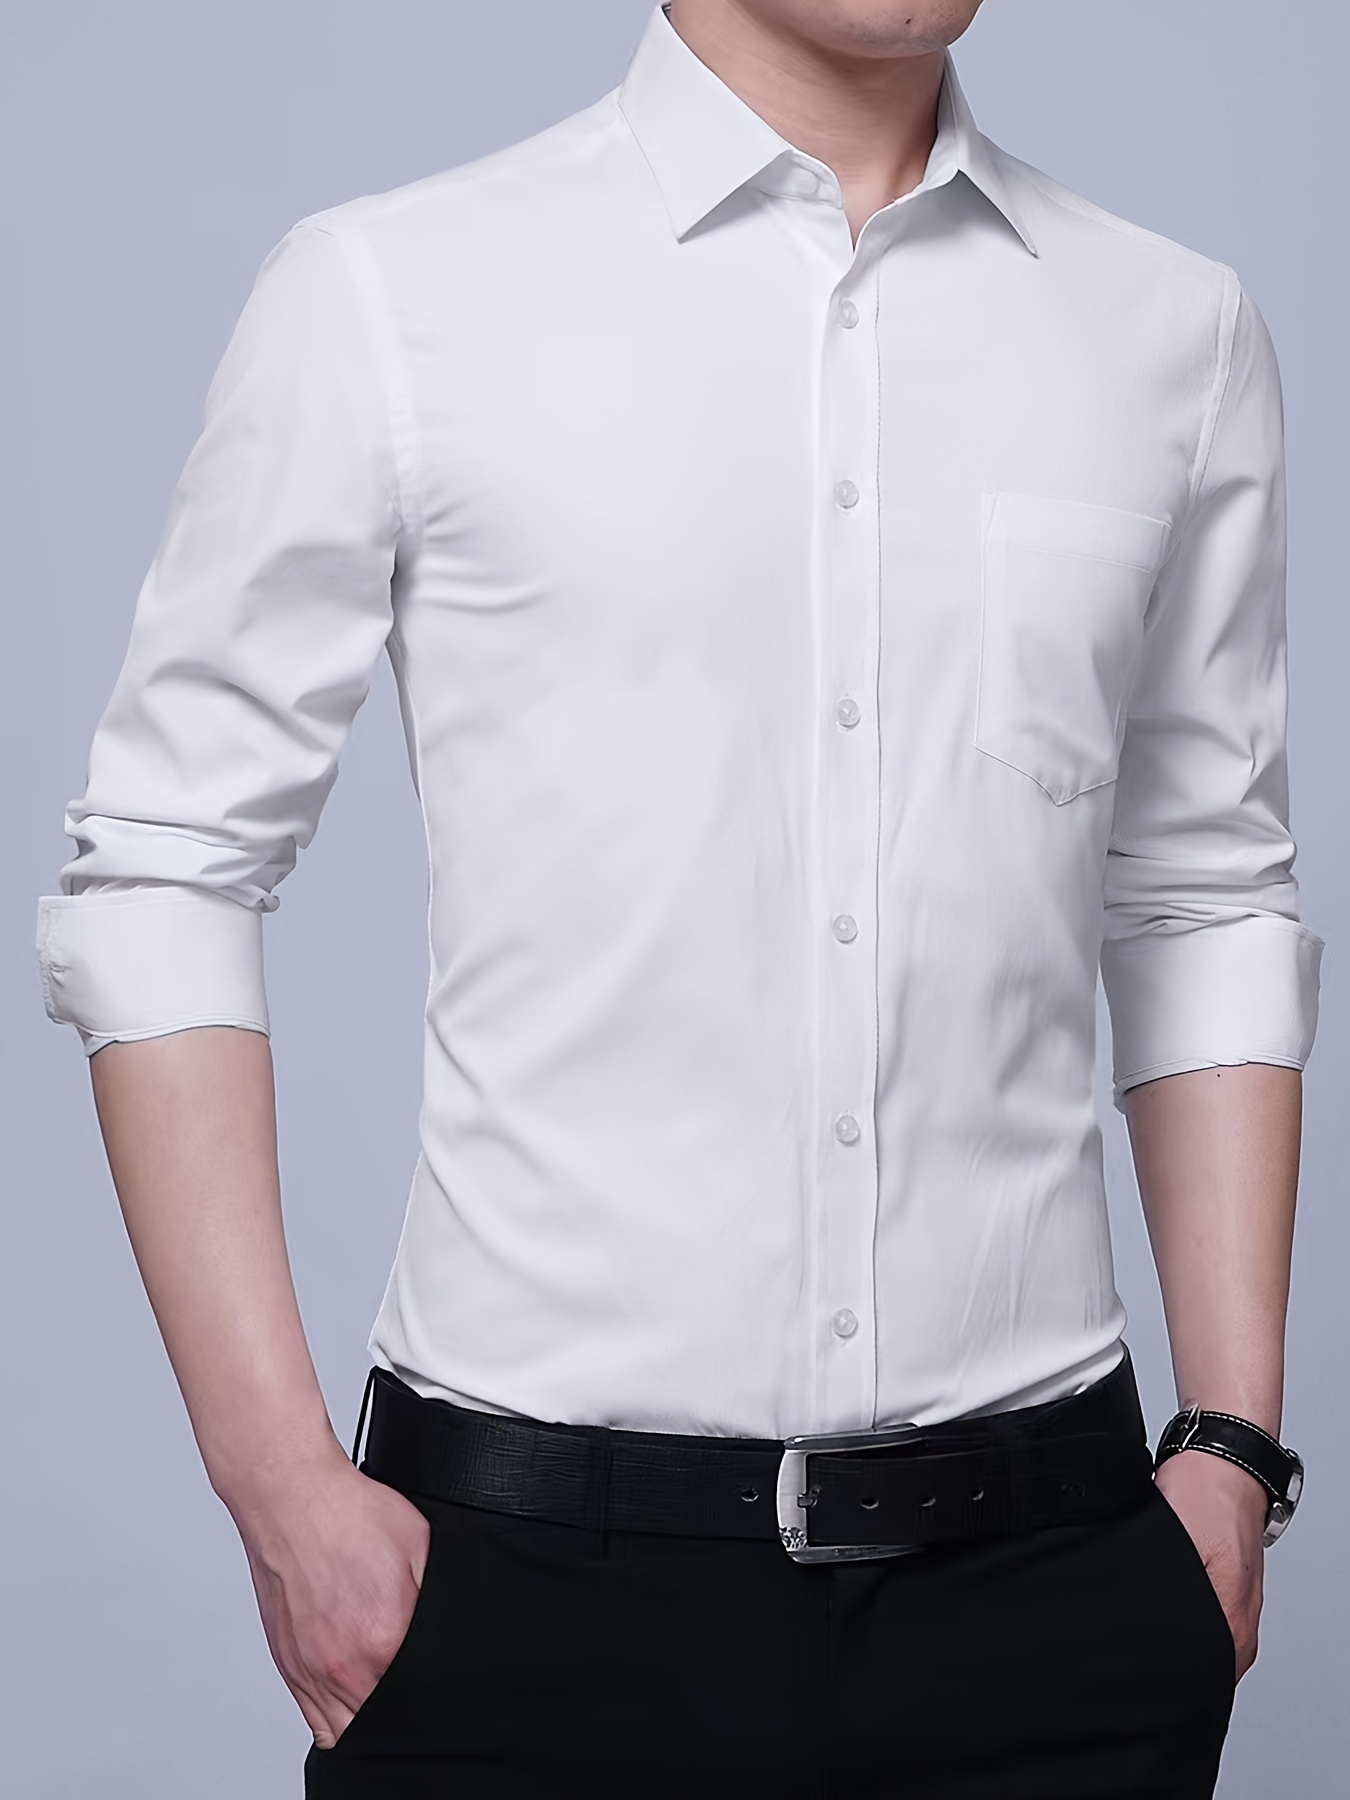 Cotton Twist Men's Regular Fit Formal Shirts, Full Sleeve